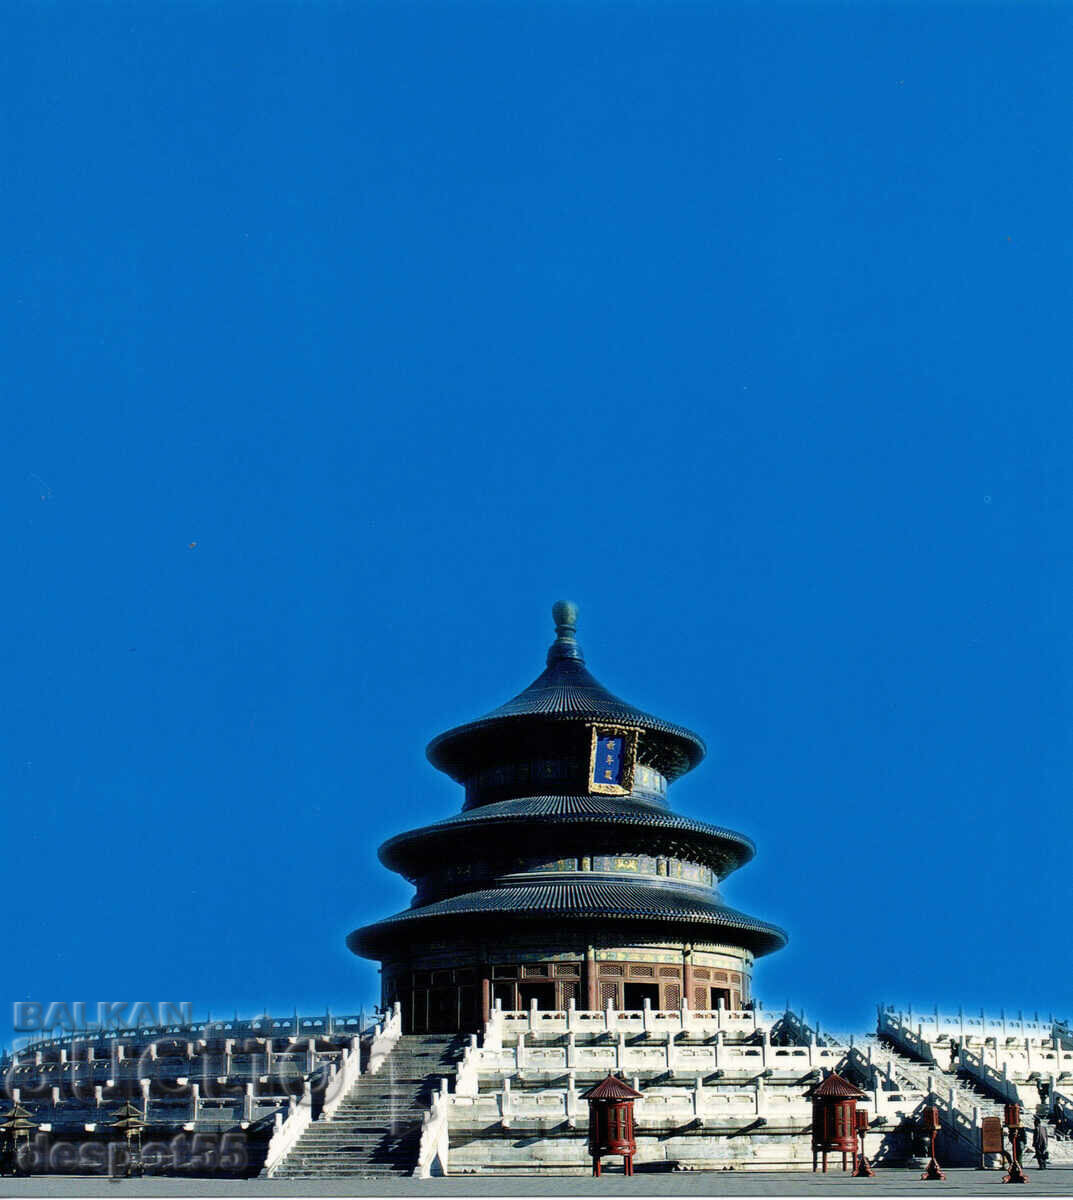 2005. China. Temple of Heaven - Beijing.